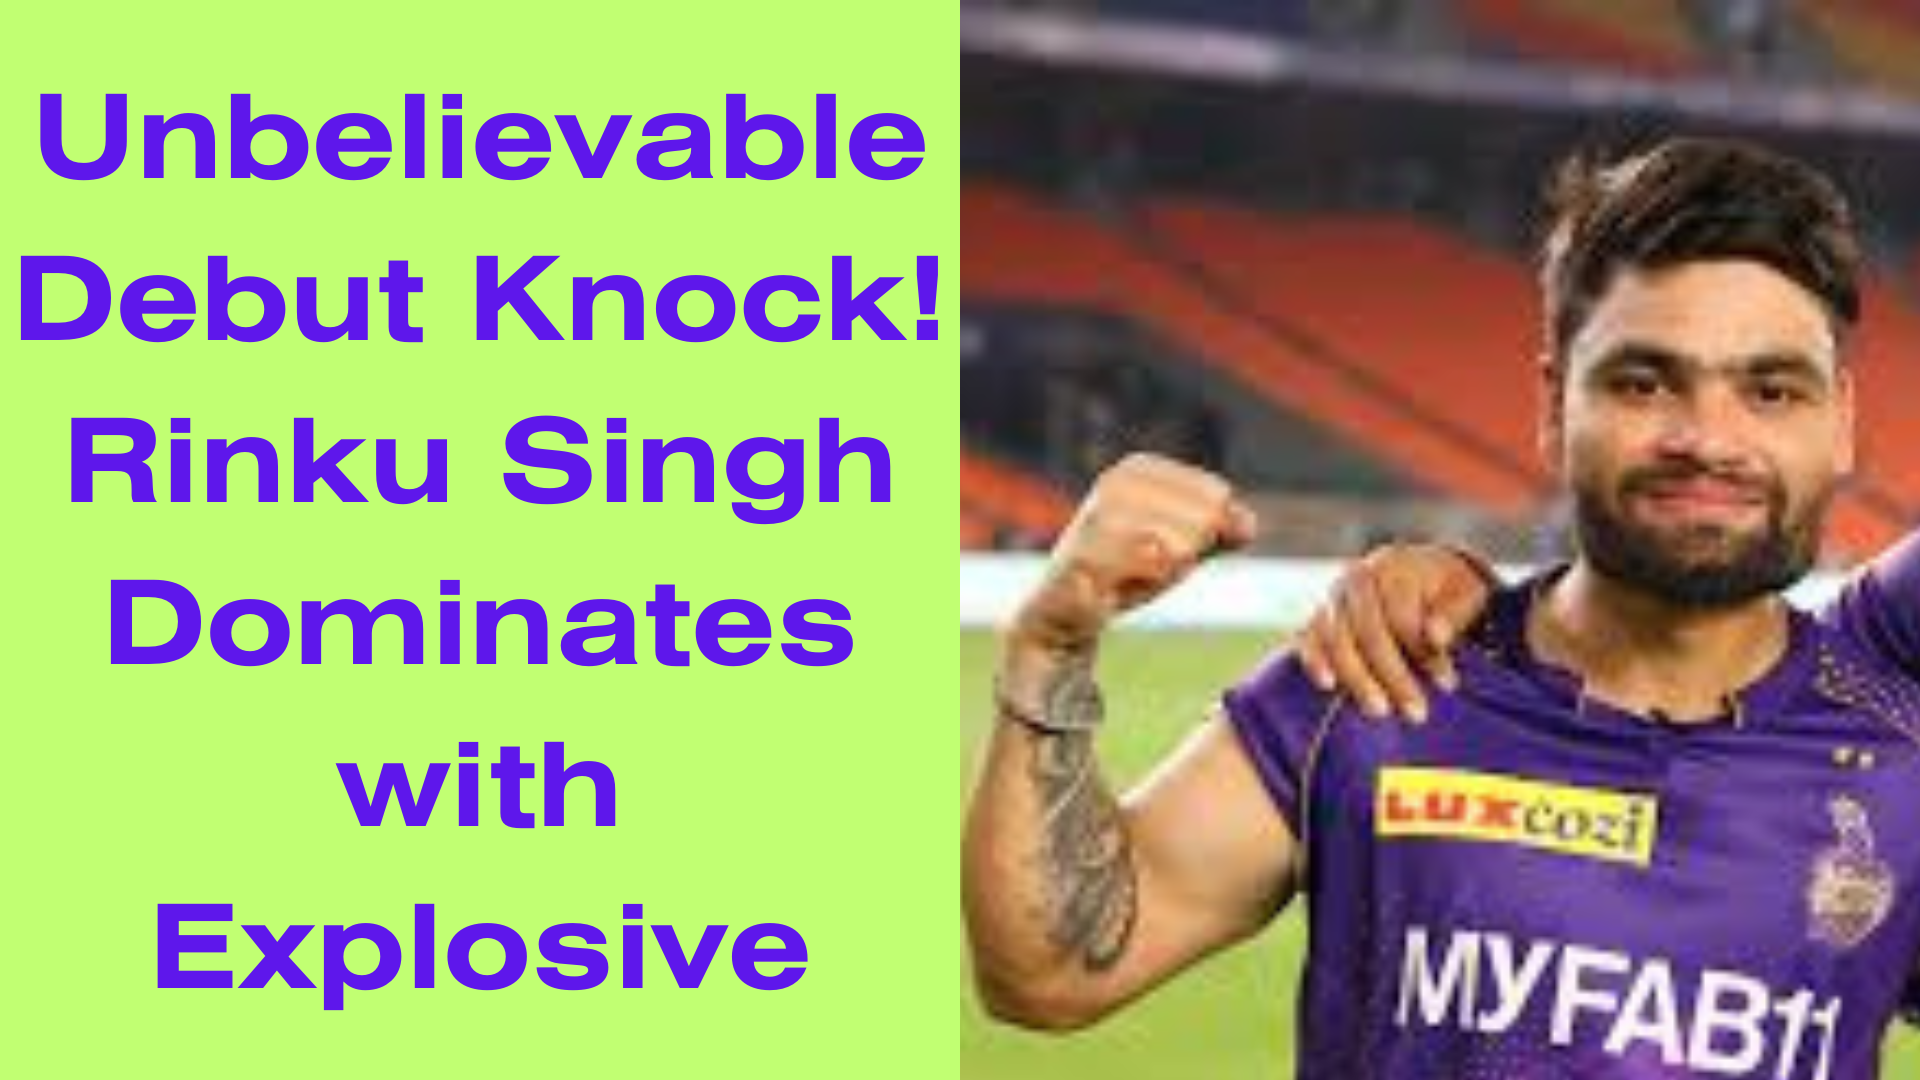 Unbelievable Debut Knock! Rinku Singh Dominates with Explosive